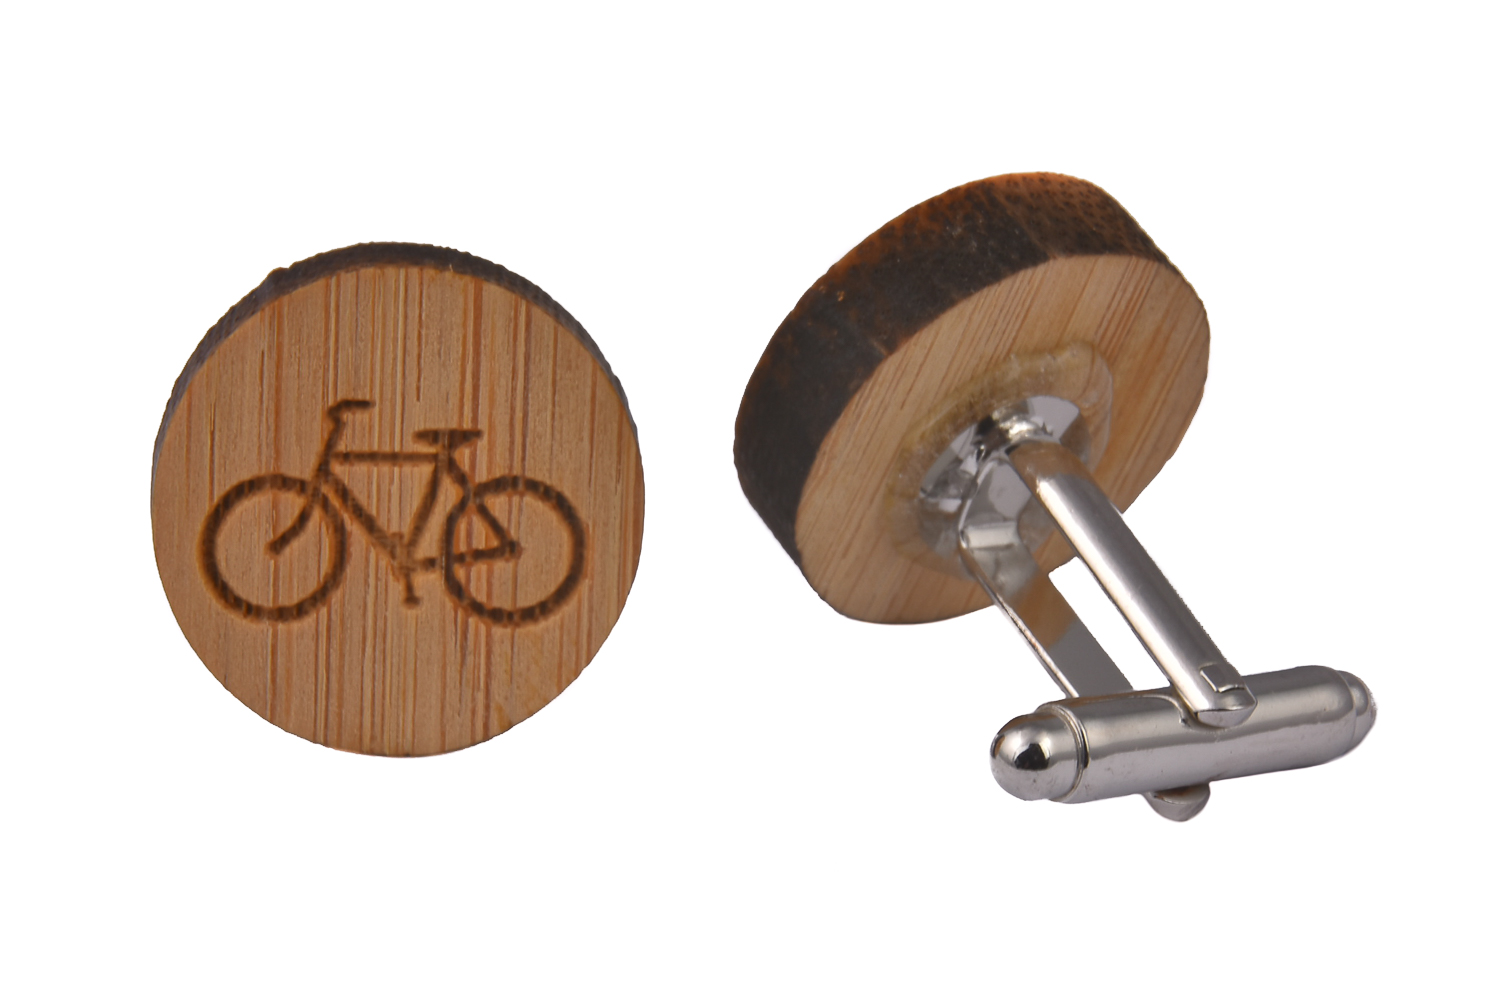 Wood Bicycle